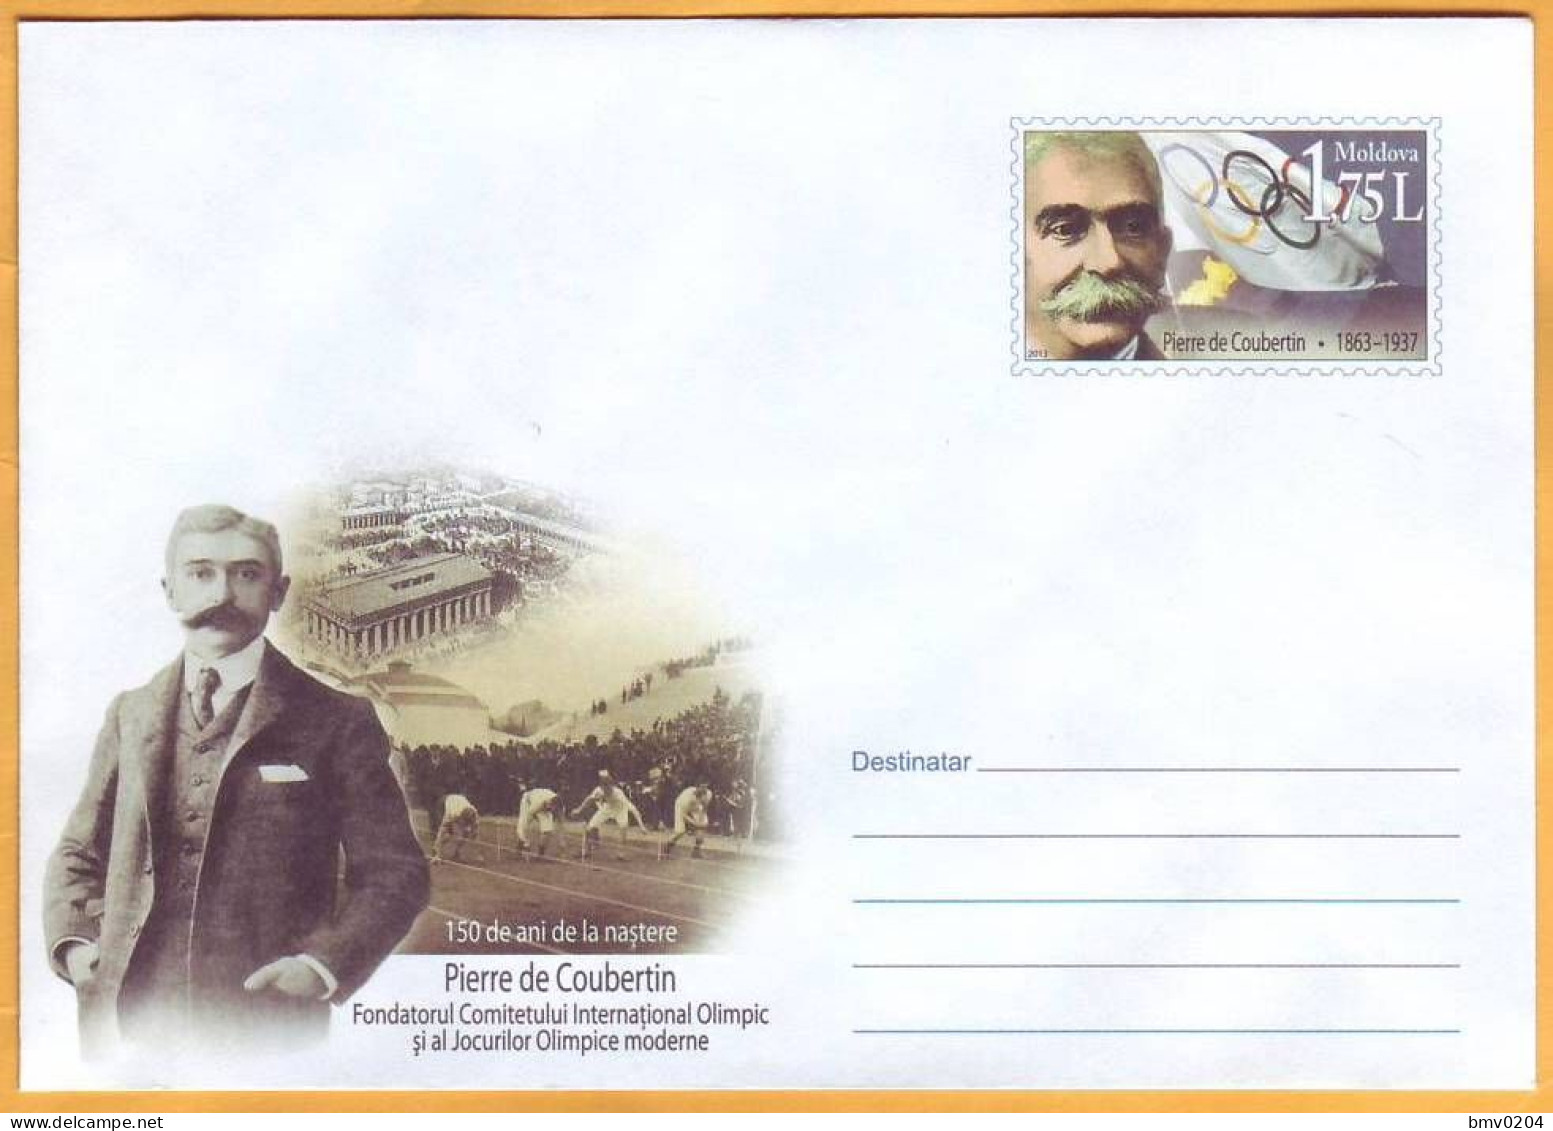 2013 Moldova  Moldavie  Moldau  Pierre De Coubertin. Olympic Games. 150 Years. Organizer. - Moldova